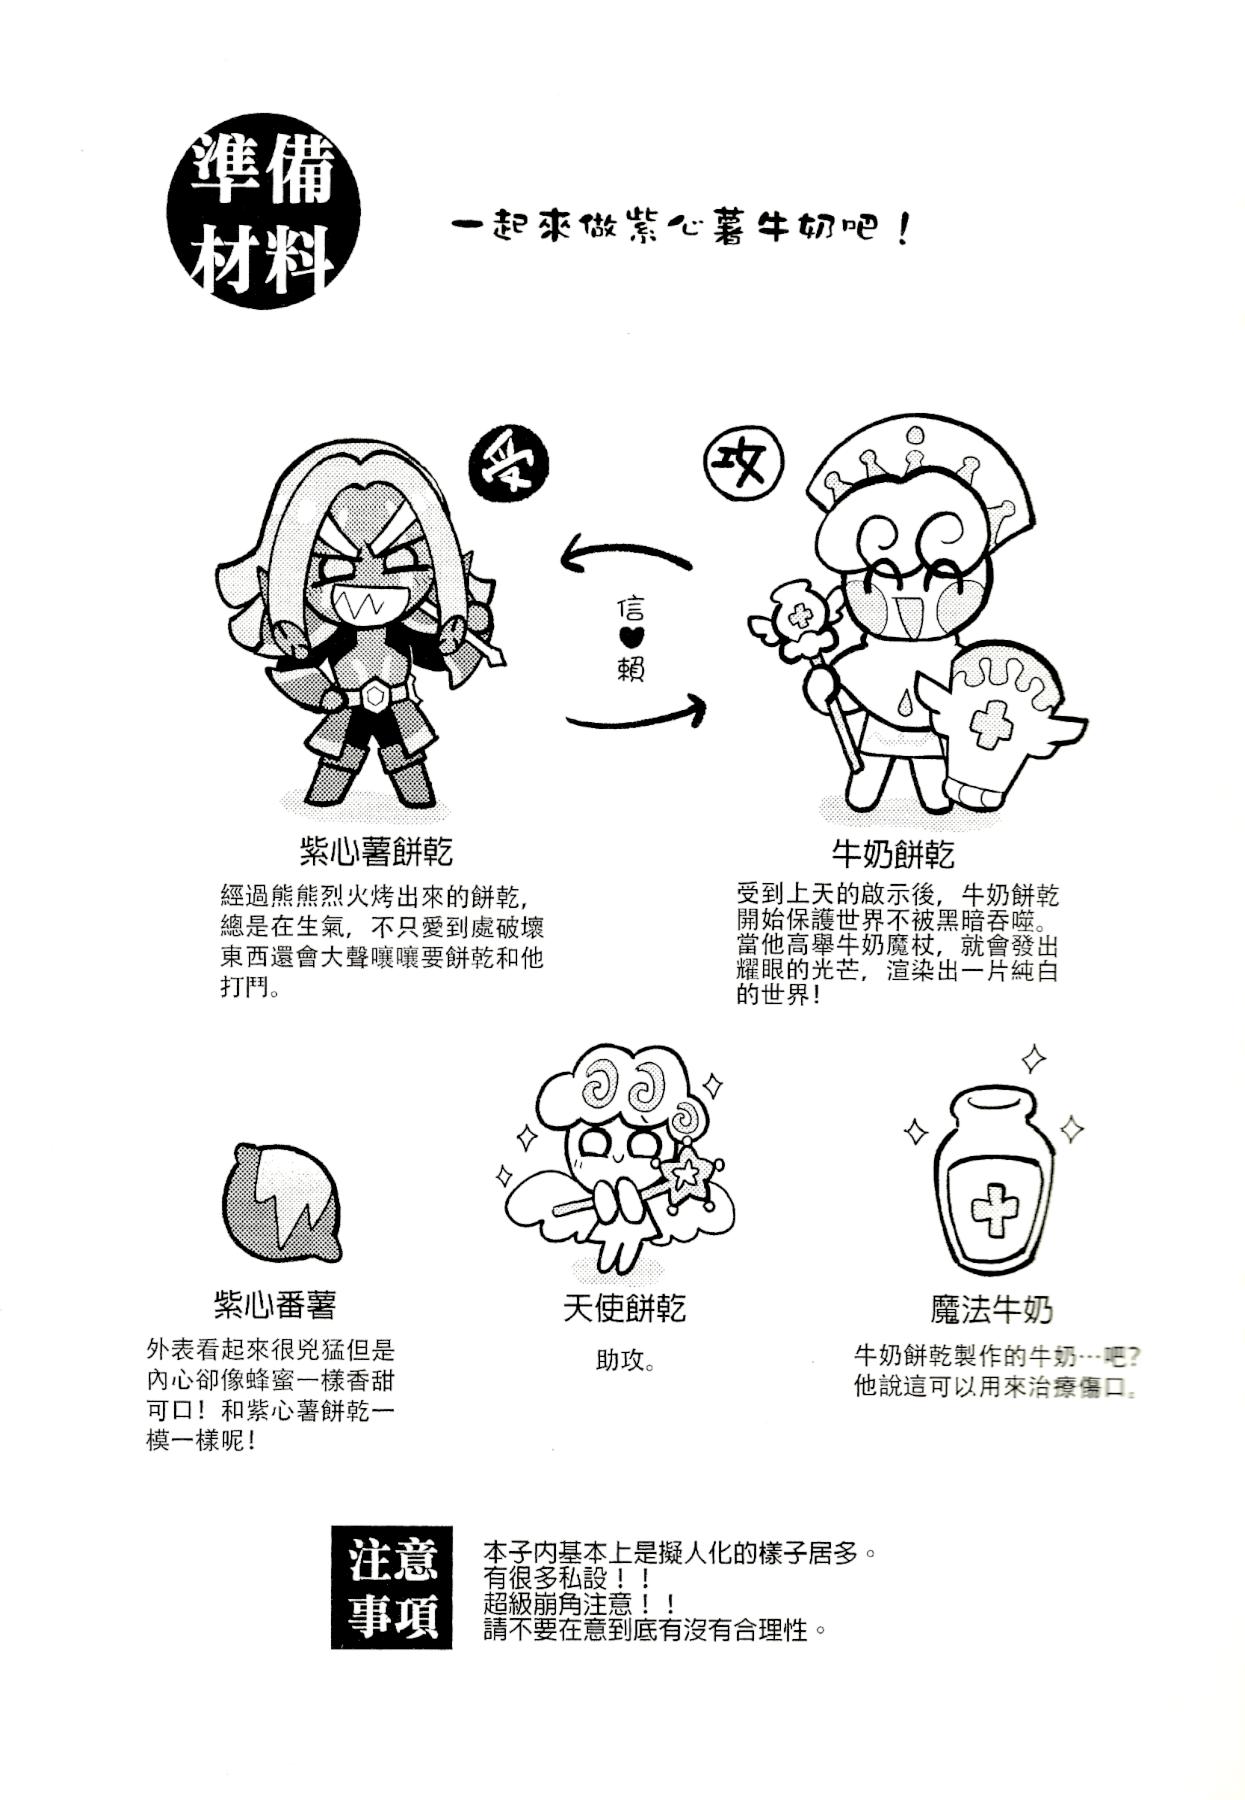 Yī qǐlái zuò zǐ xīn shǔ niúnǎi ba | "Let's make purple sweet potato milk together" 2